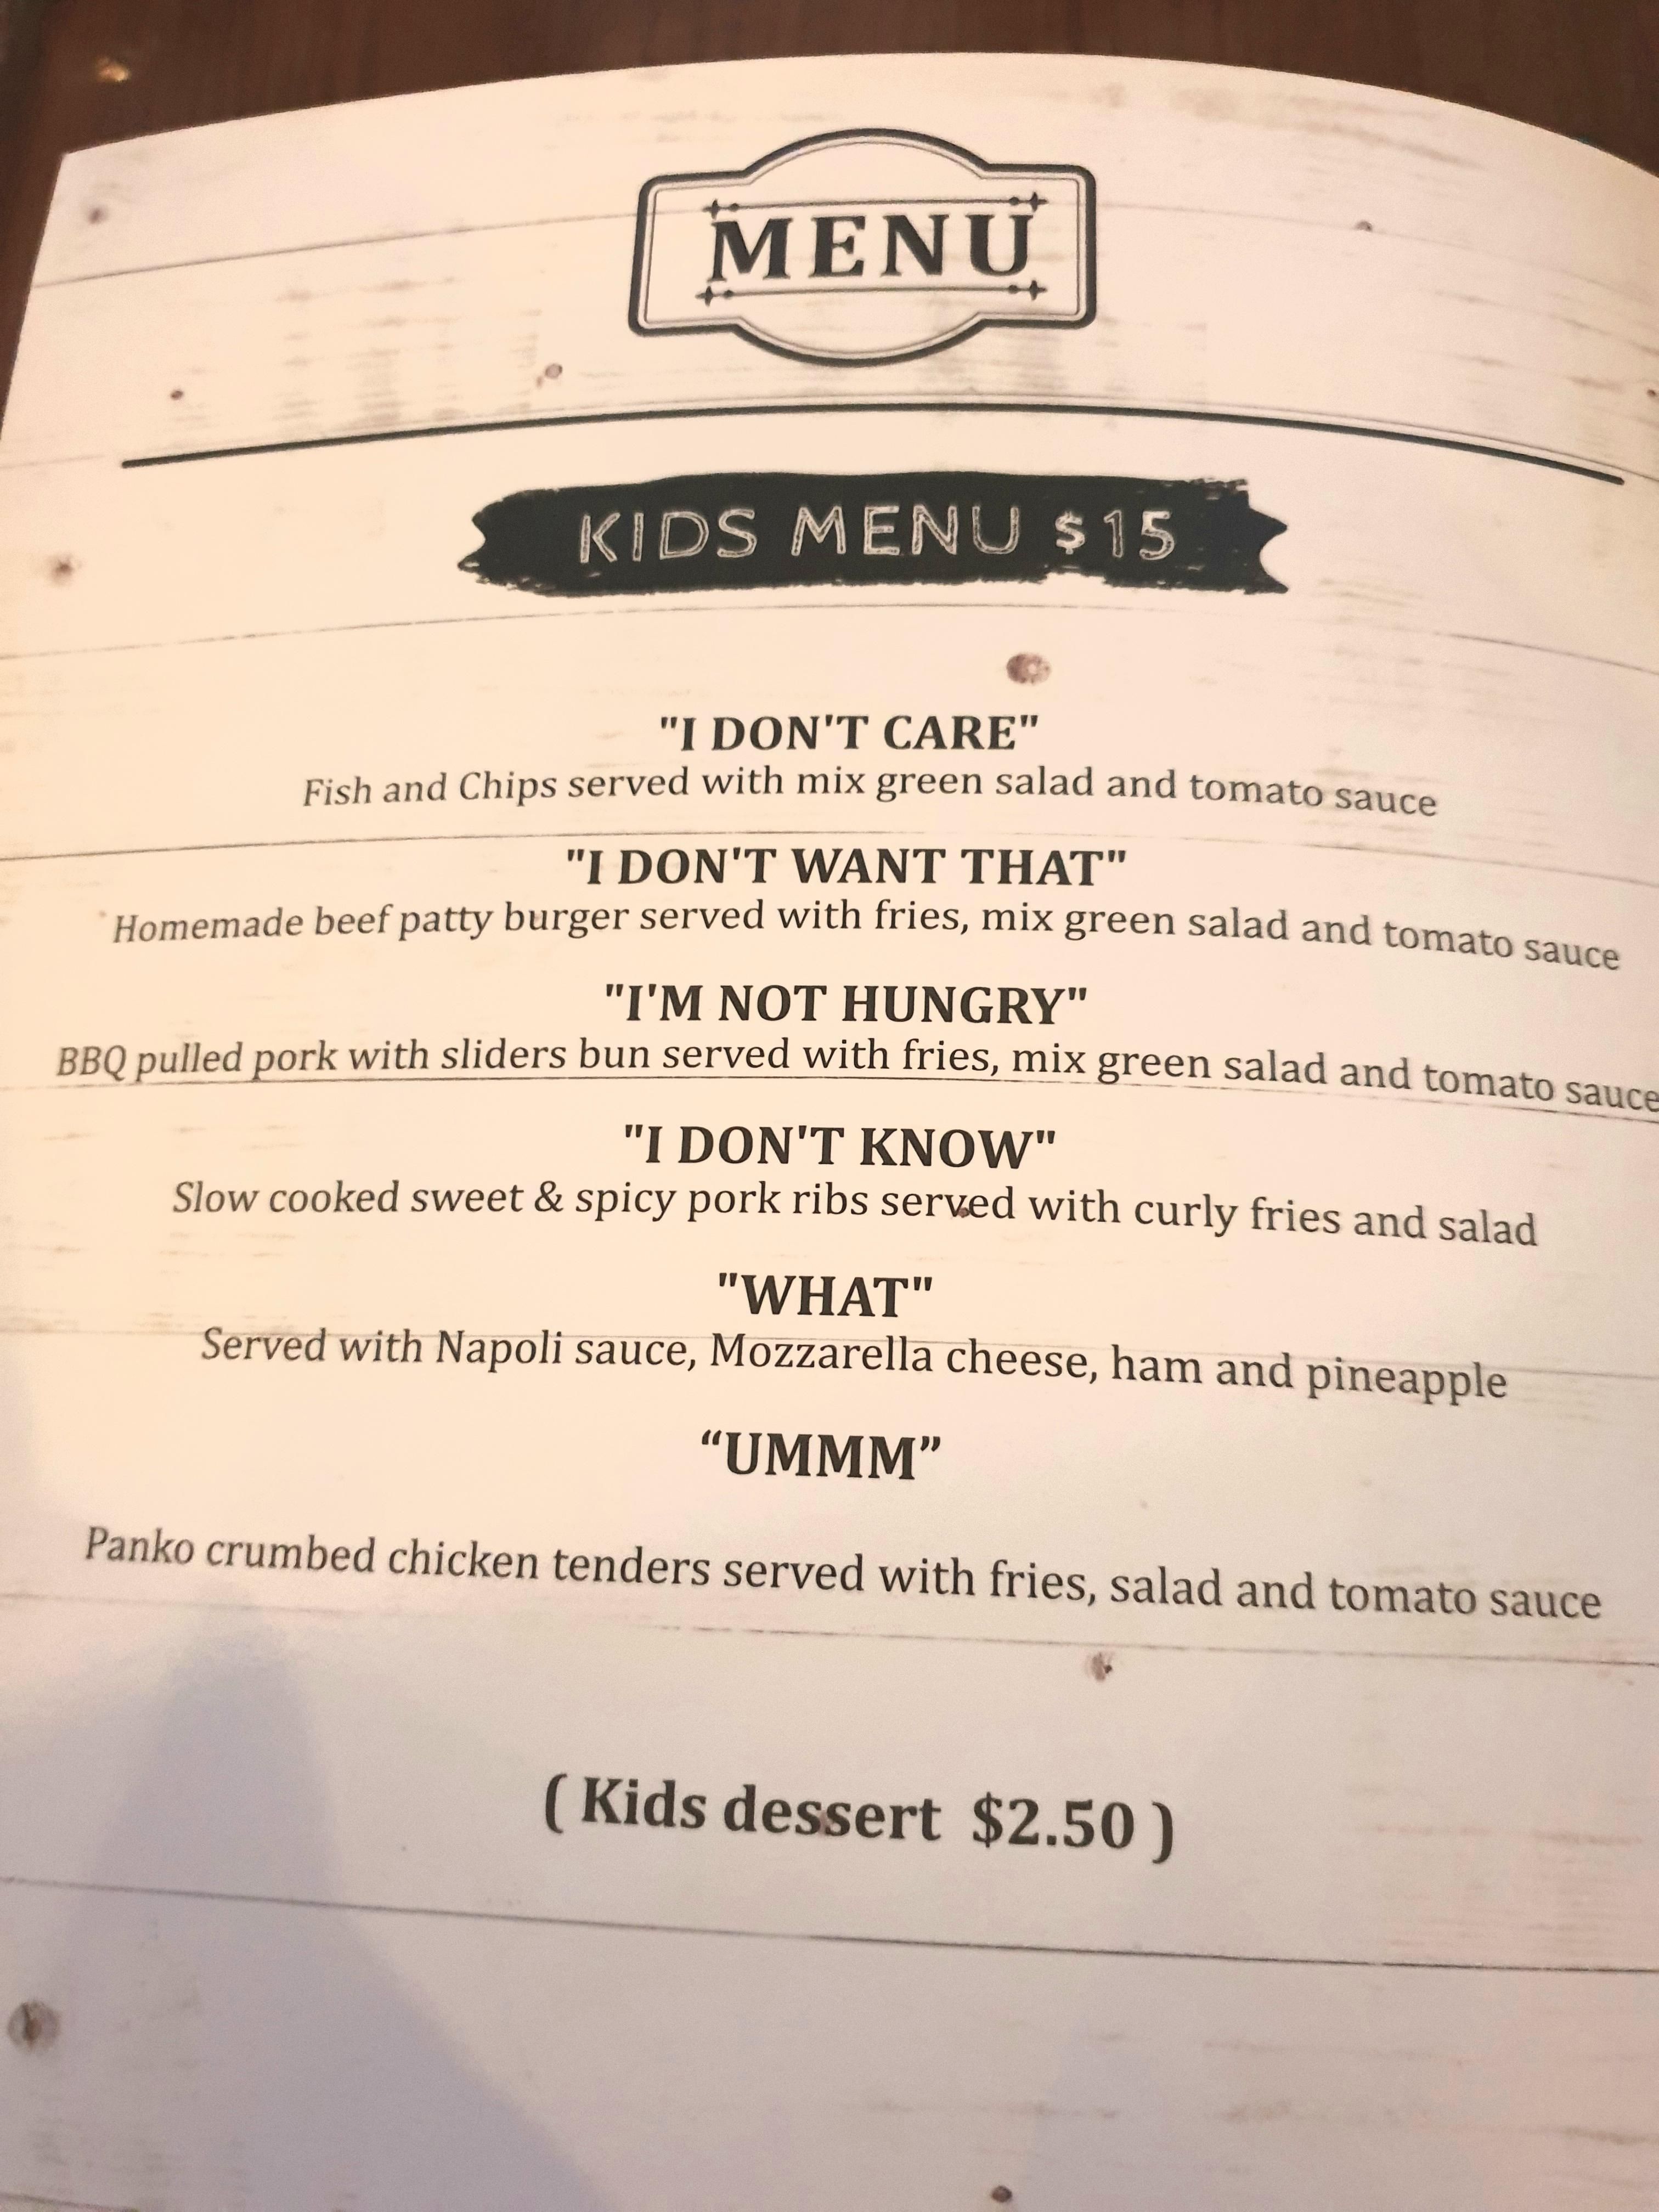 The kids menu at a local restaurant